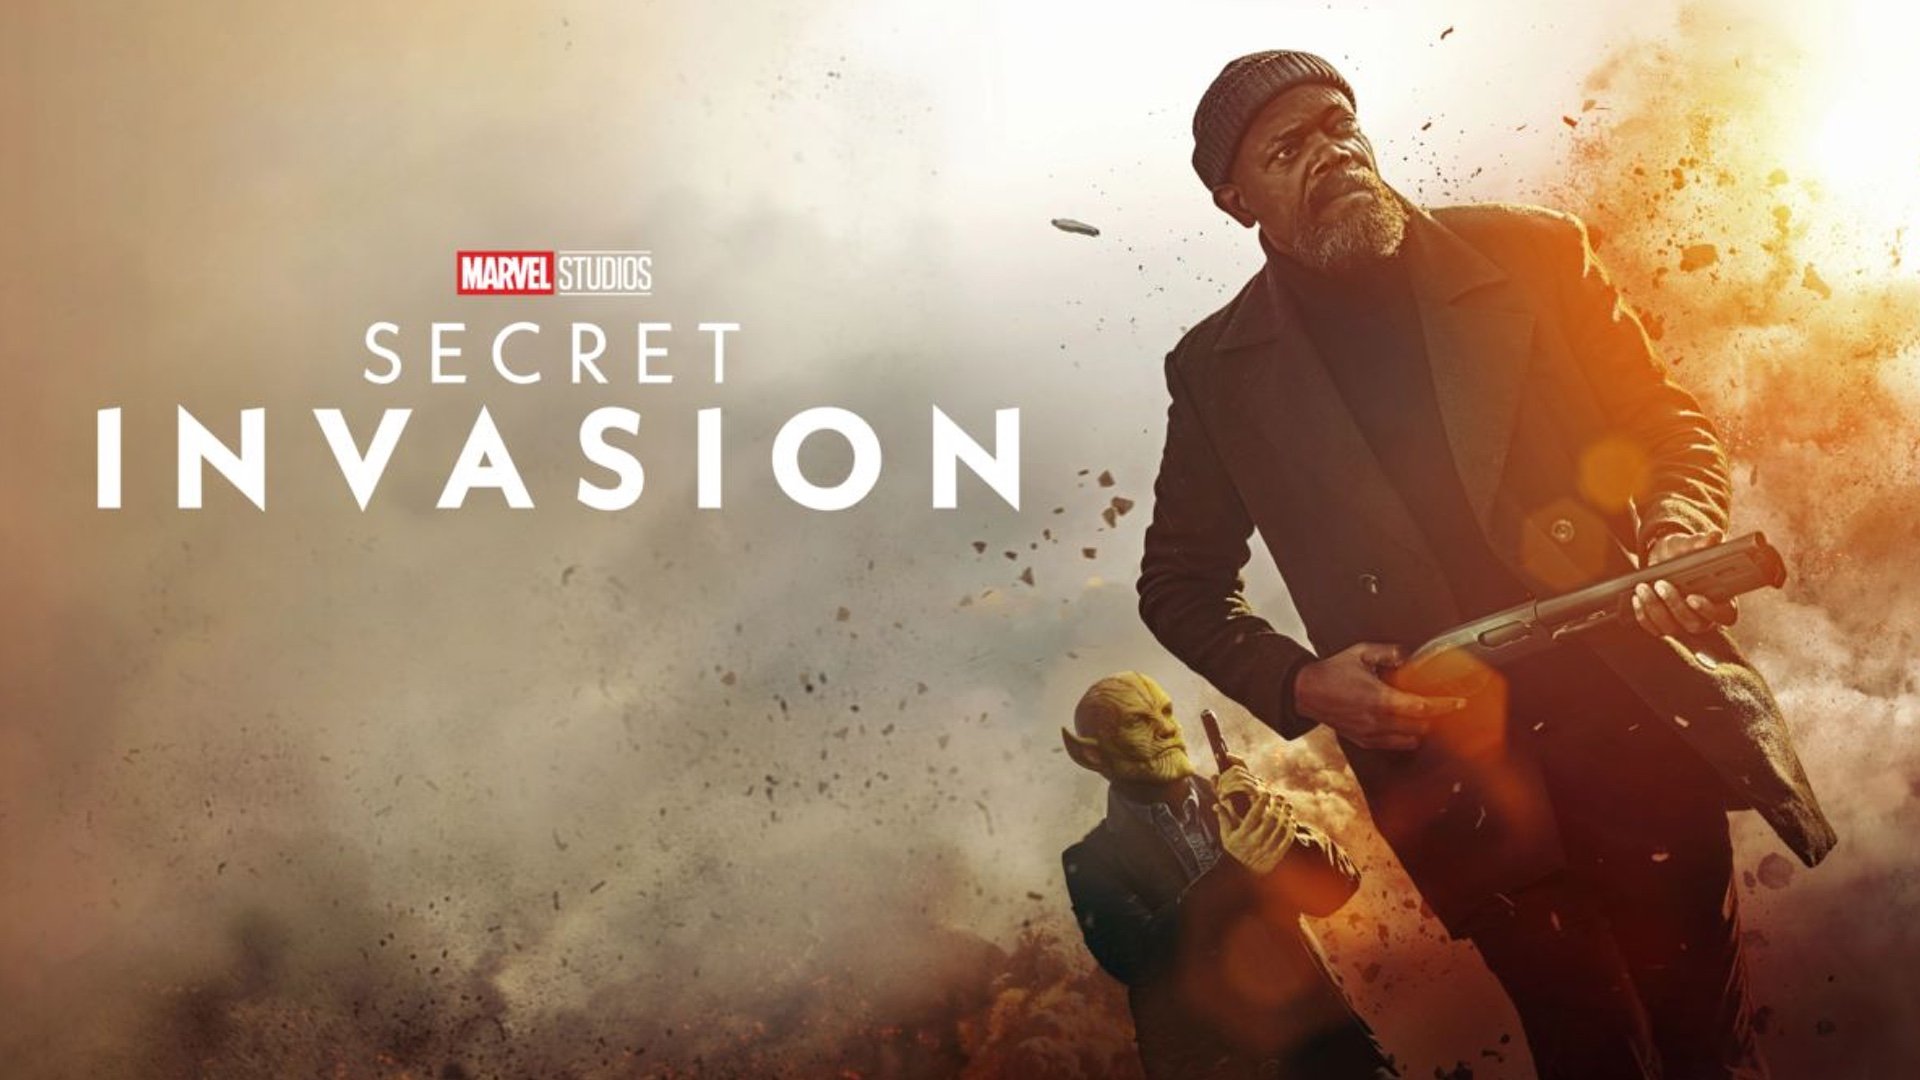 Marvel Studios' Secret Invasion – NEW TRAILER